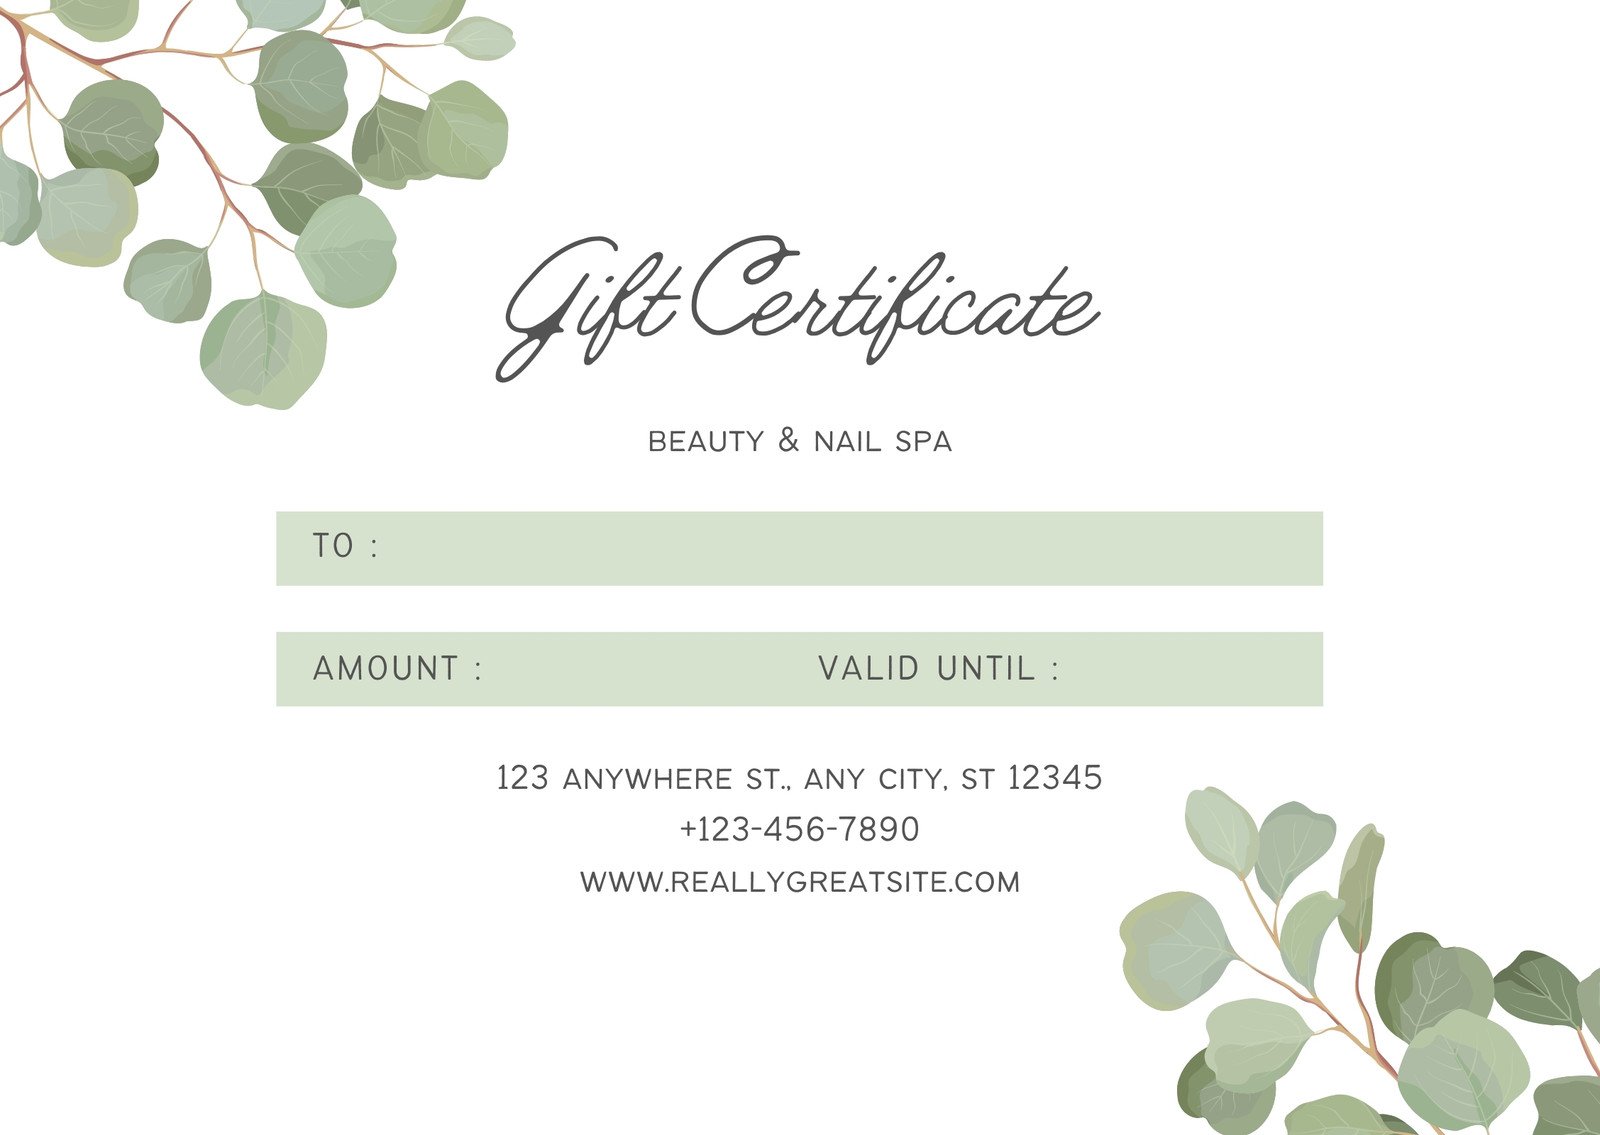 Massage Gift Certificate Template